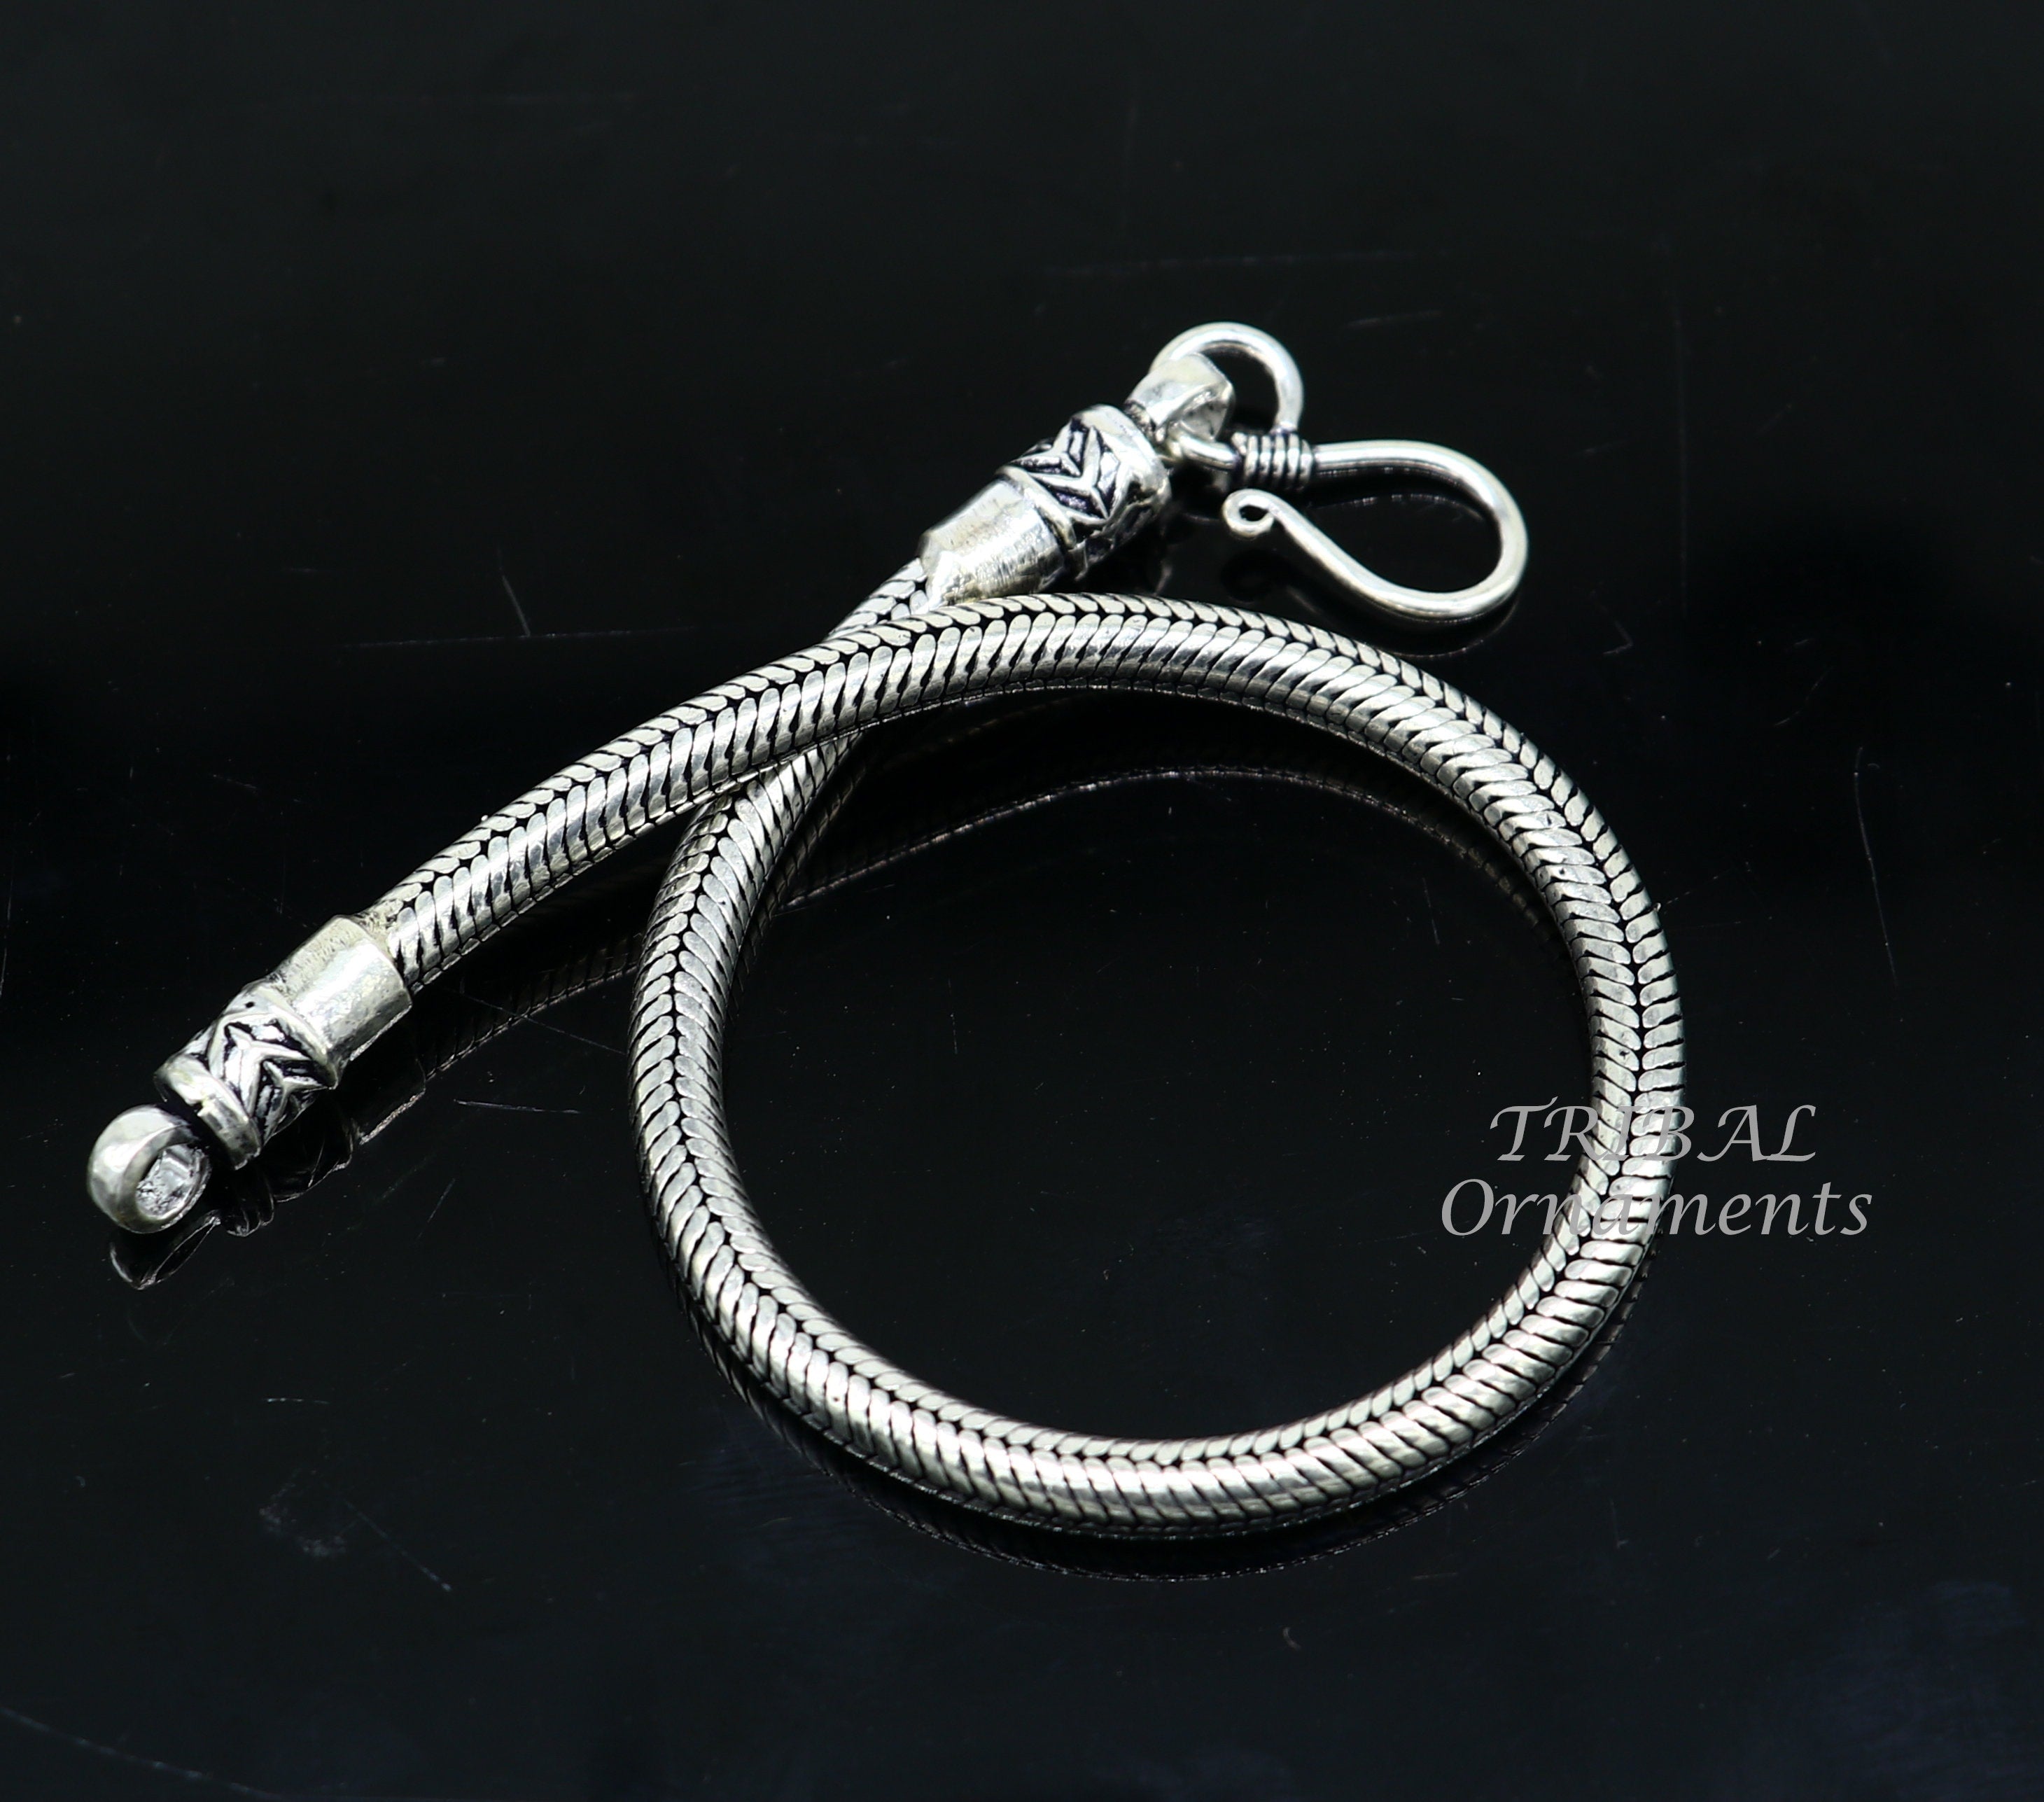 5MM Solid 925 sterling silver handmade amazing snake chain flexible unisex bracelet  jewelry elegant custom wrist belt bracelet india sbr374  TRIBAL ORNAMENTS